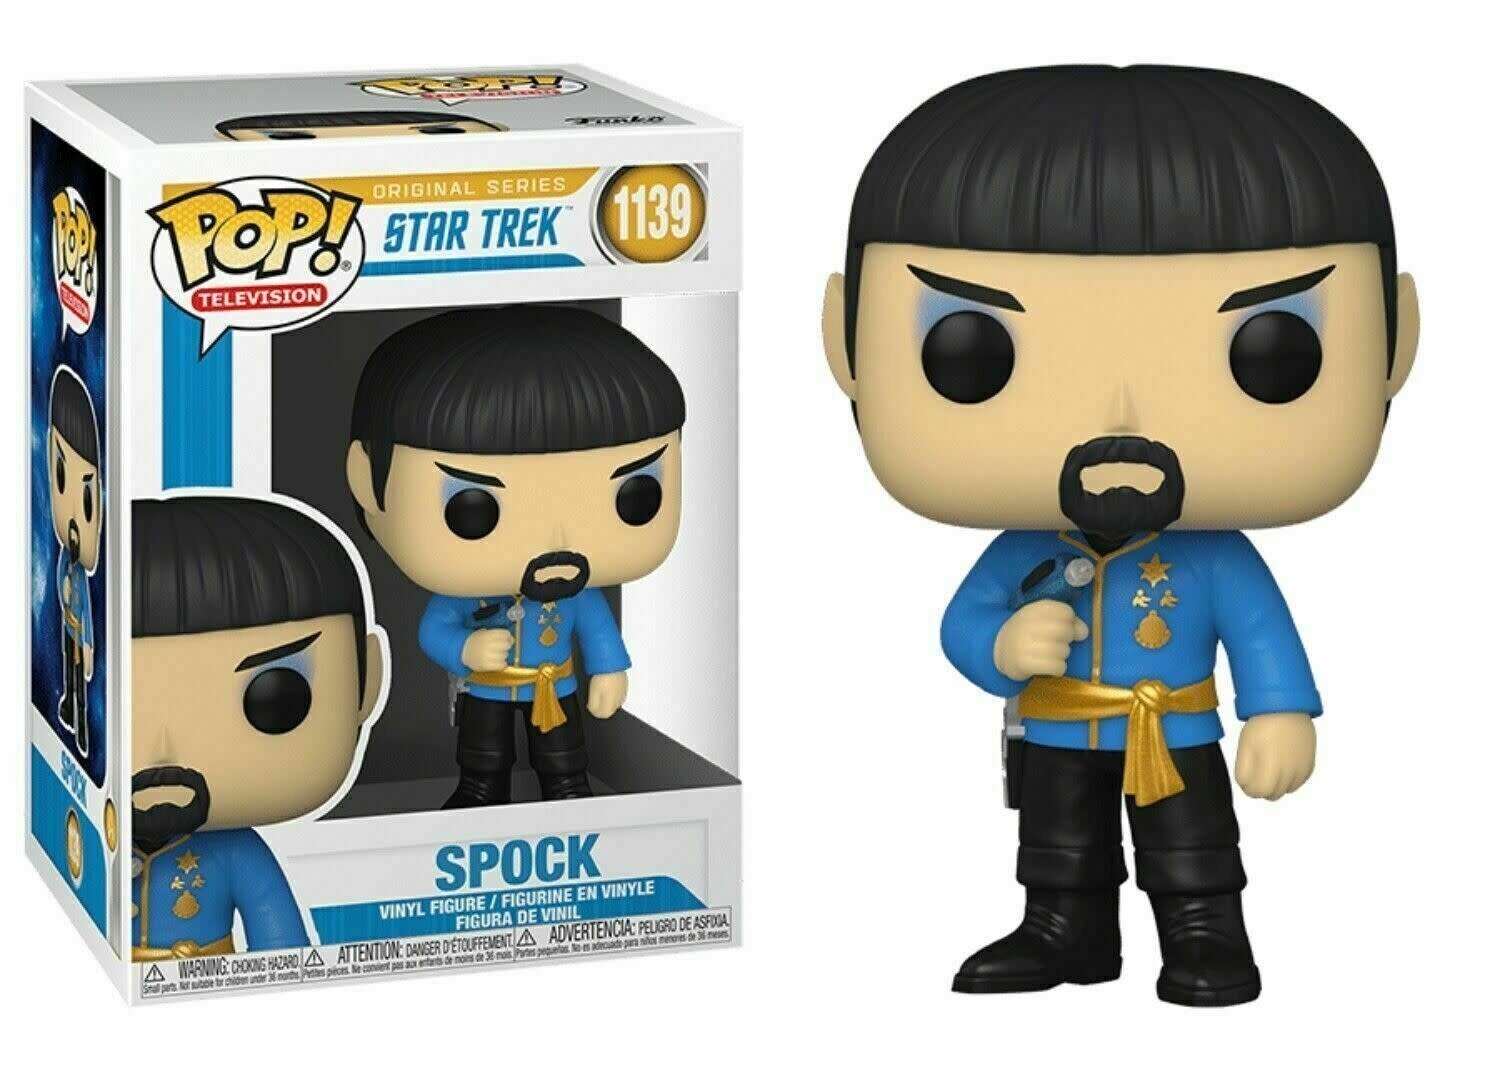 Star Trek Spock 1139 Funko Pop